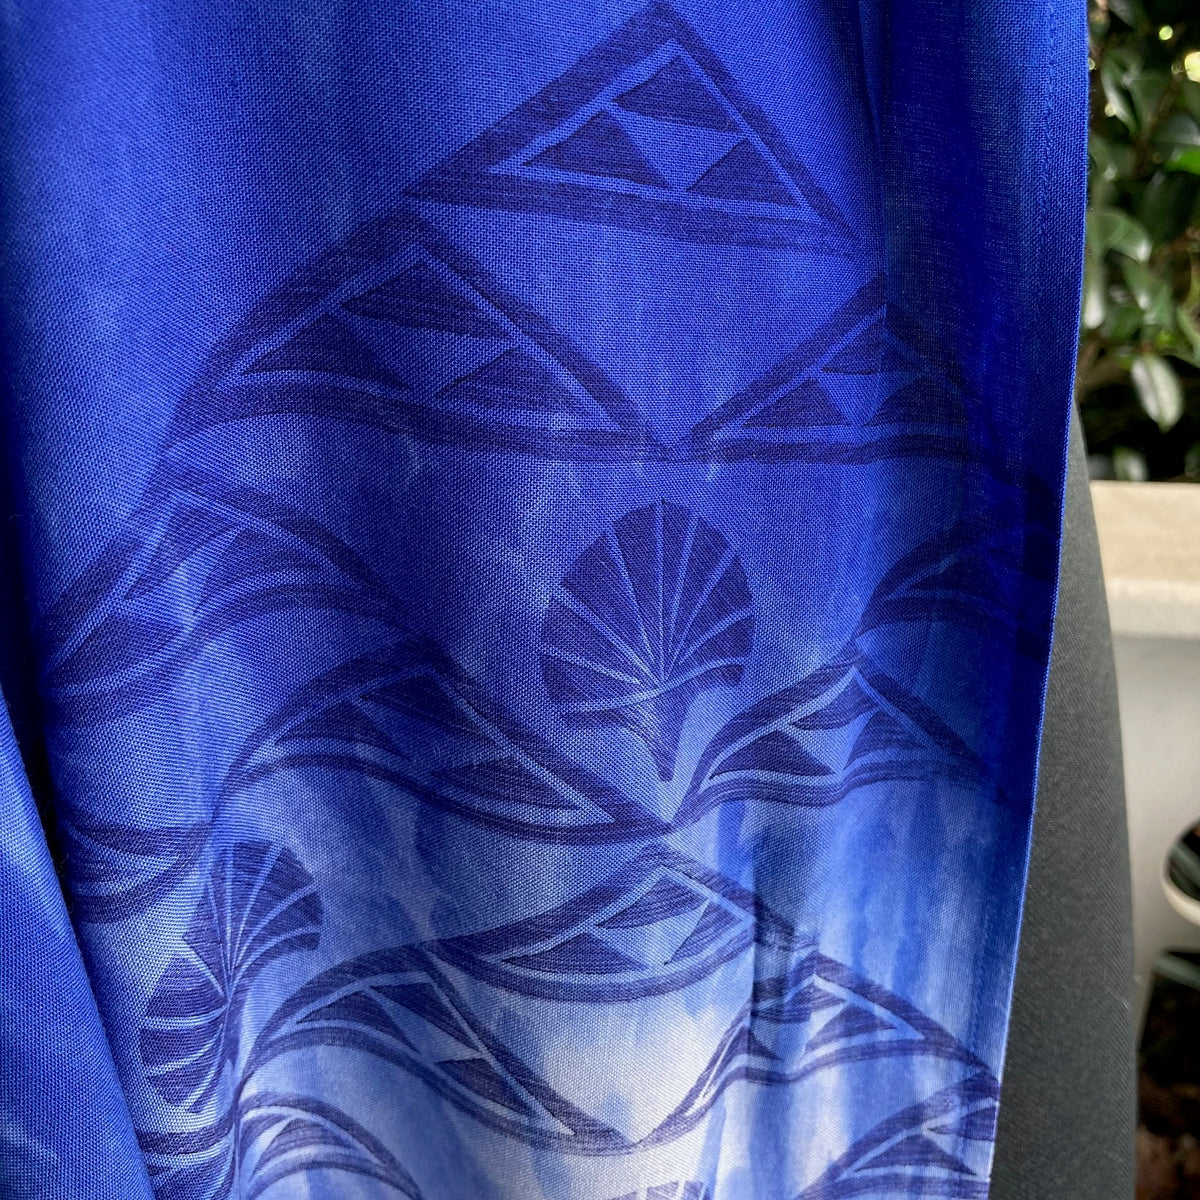 Ohe Kapala Shrug in Royal Blue with the Mauna and Lehua